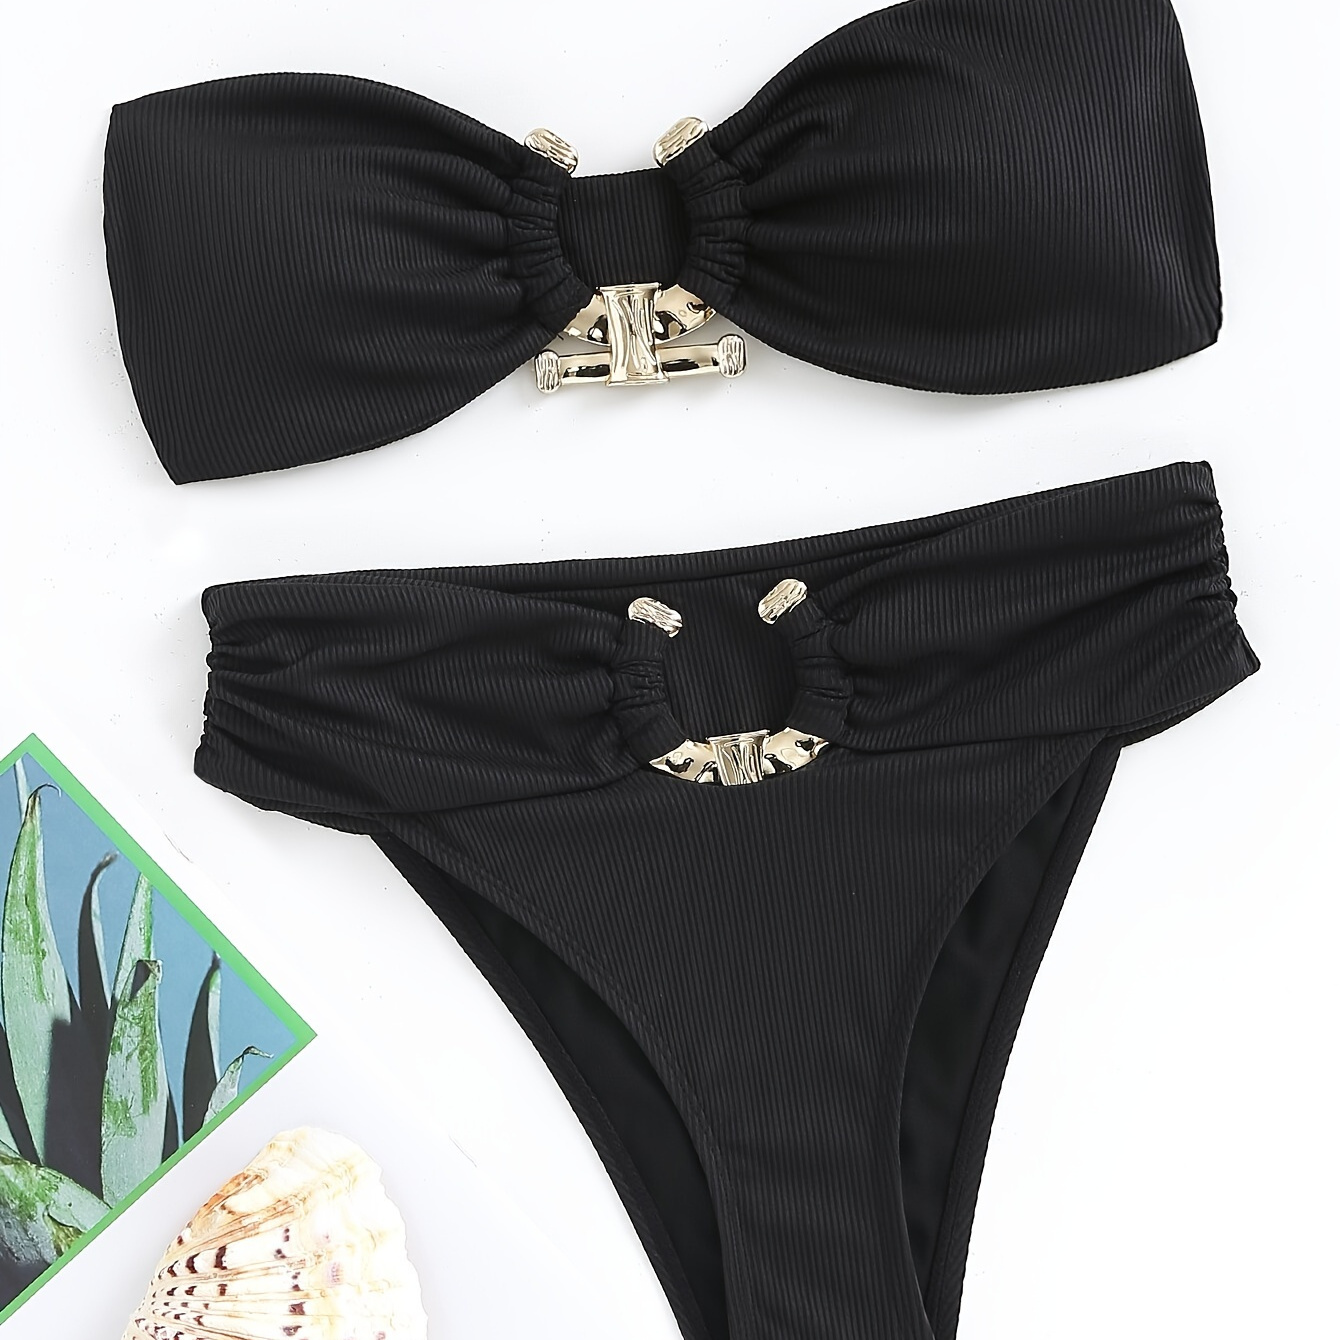 

Black Ring-linked Bikini Sets, Tube Top Bandeau High Cut 2 Pieces Swimsuit, Women's Swimwear & Clothing Valentine's Day